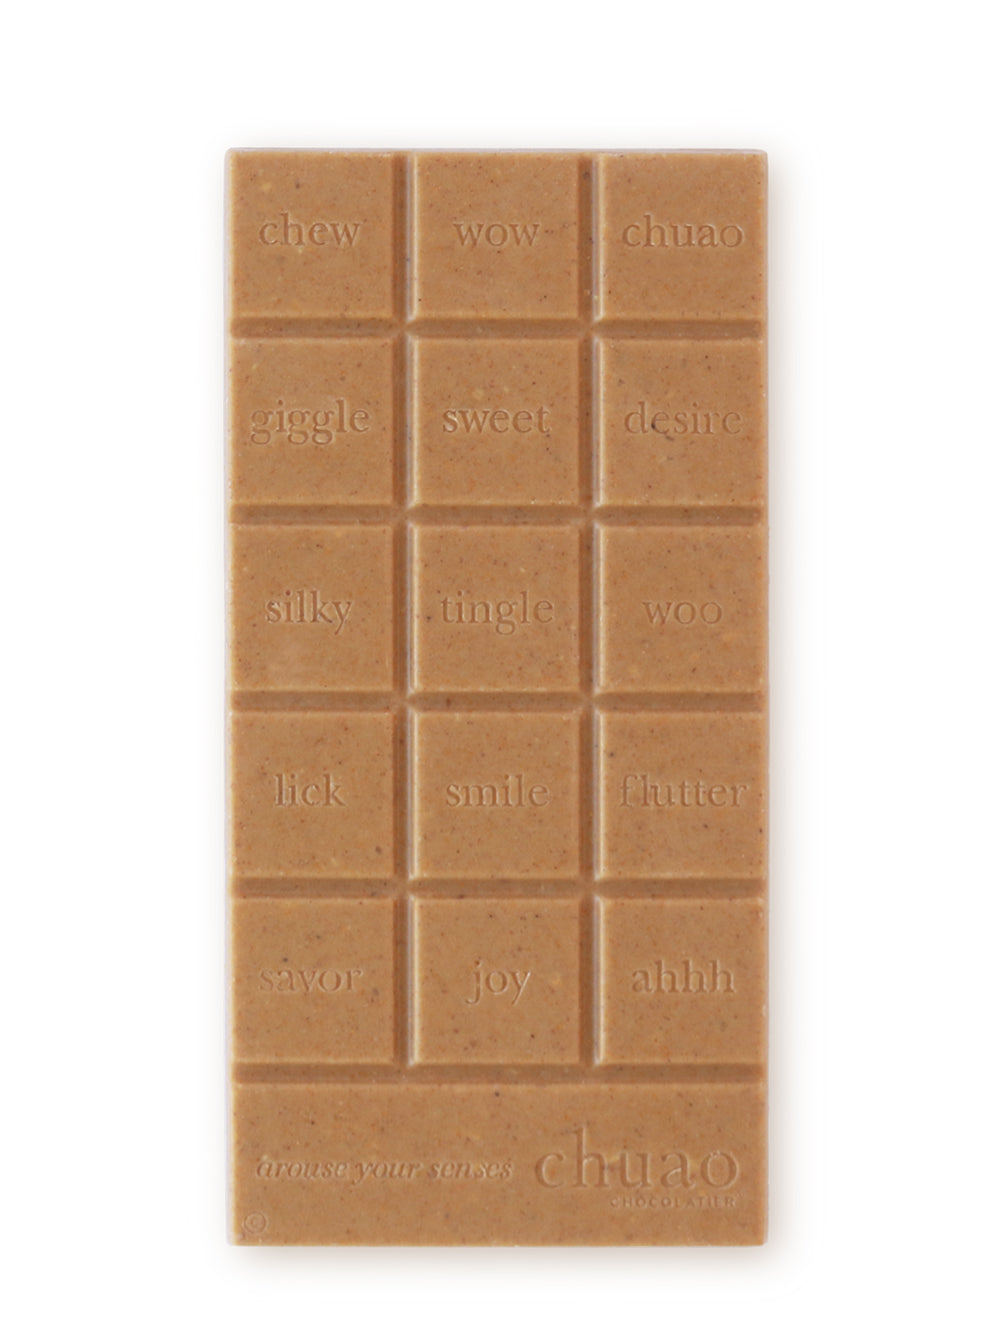 Golden Goodness Mini Bars – Chuao Chocolatier